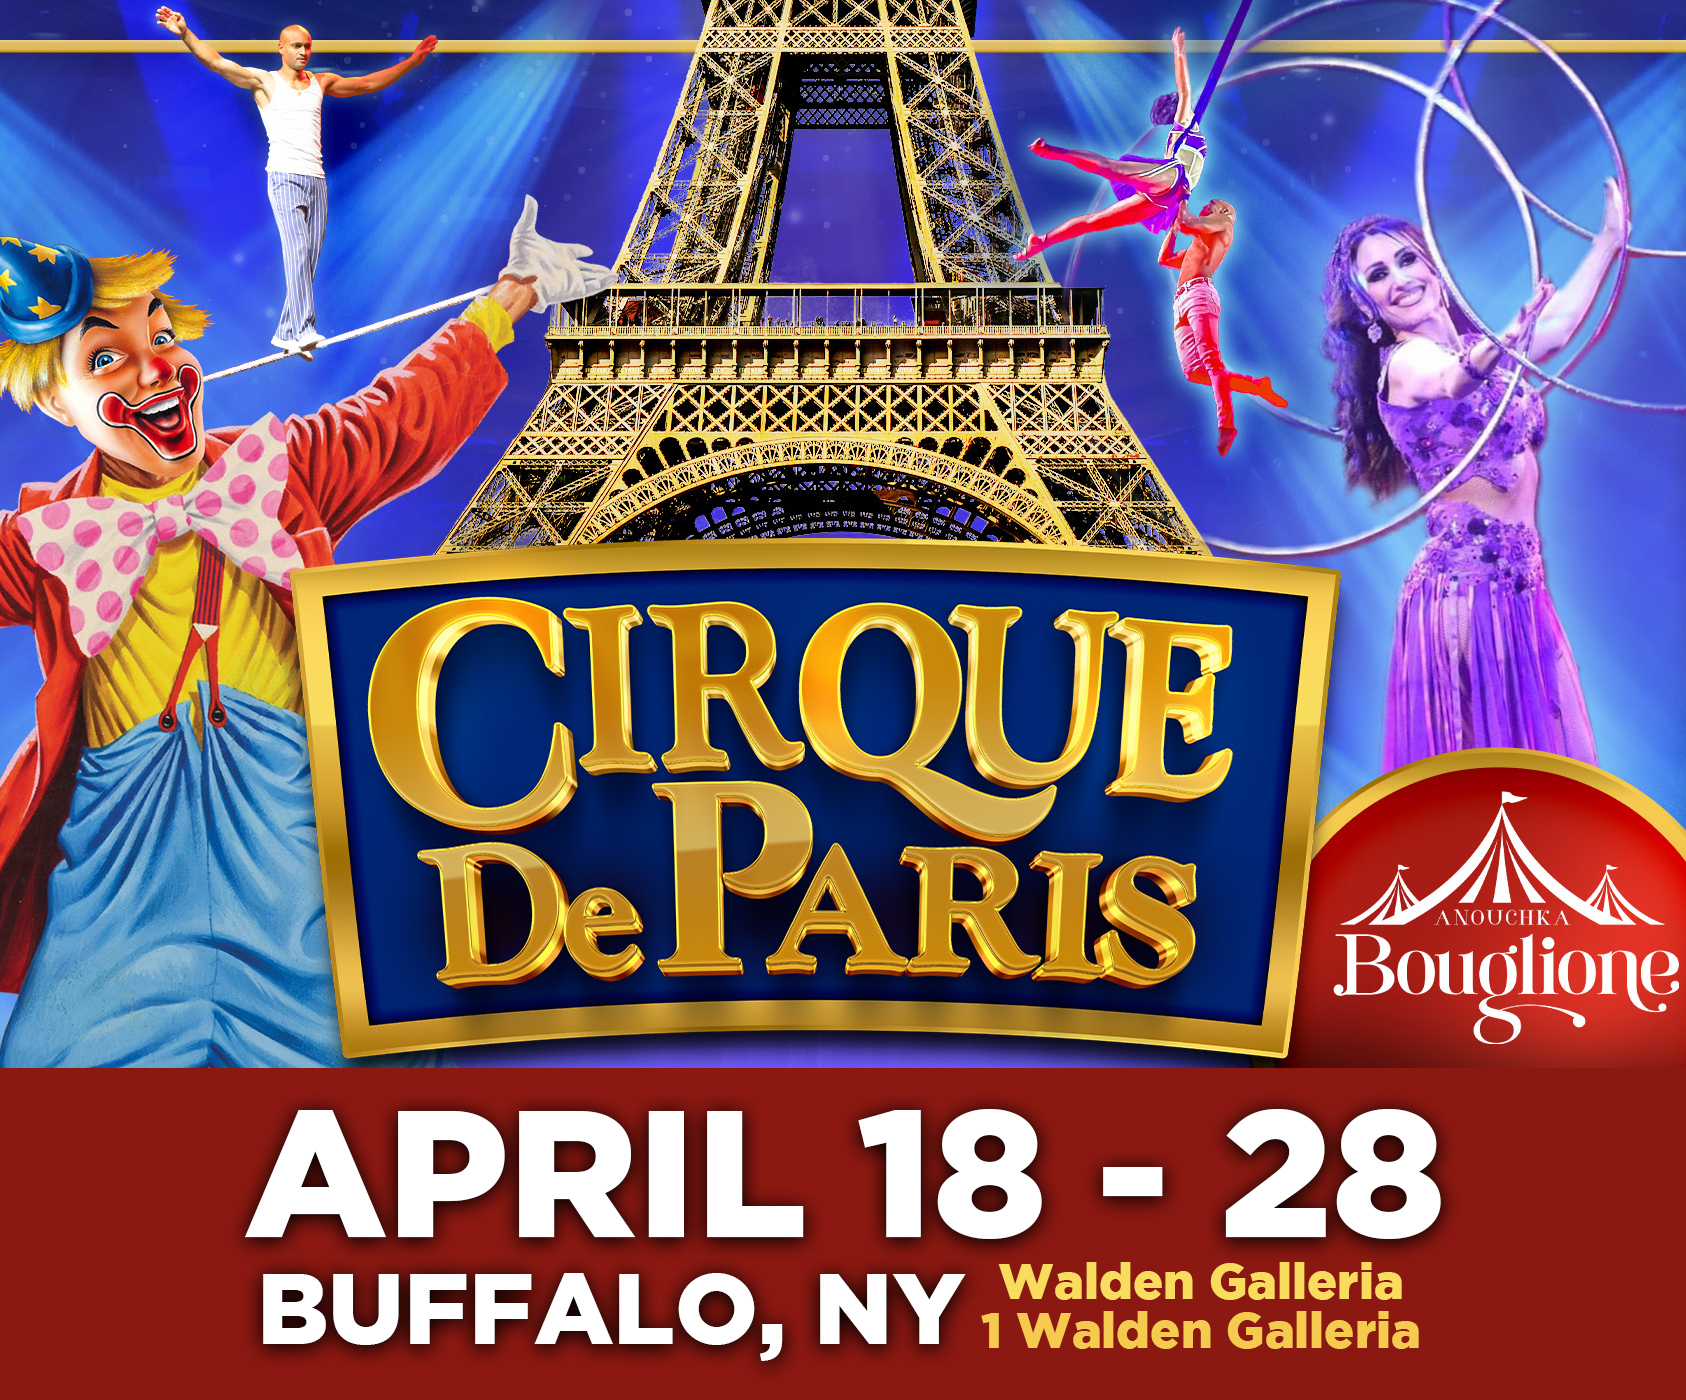 Cirque de Paris Website Image Graphic